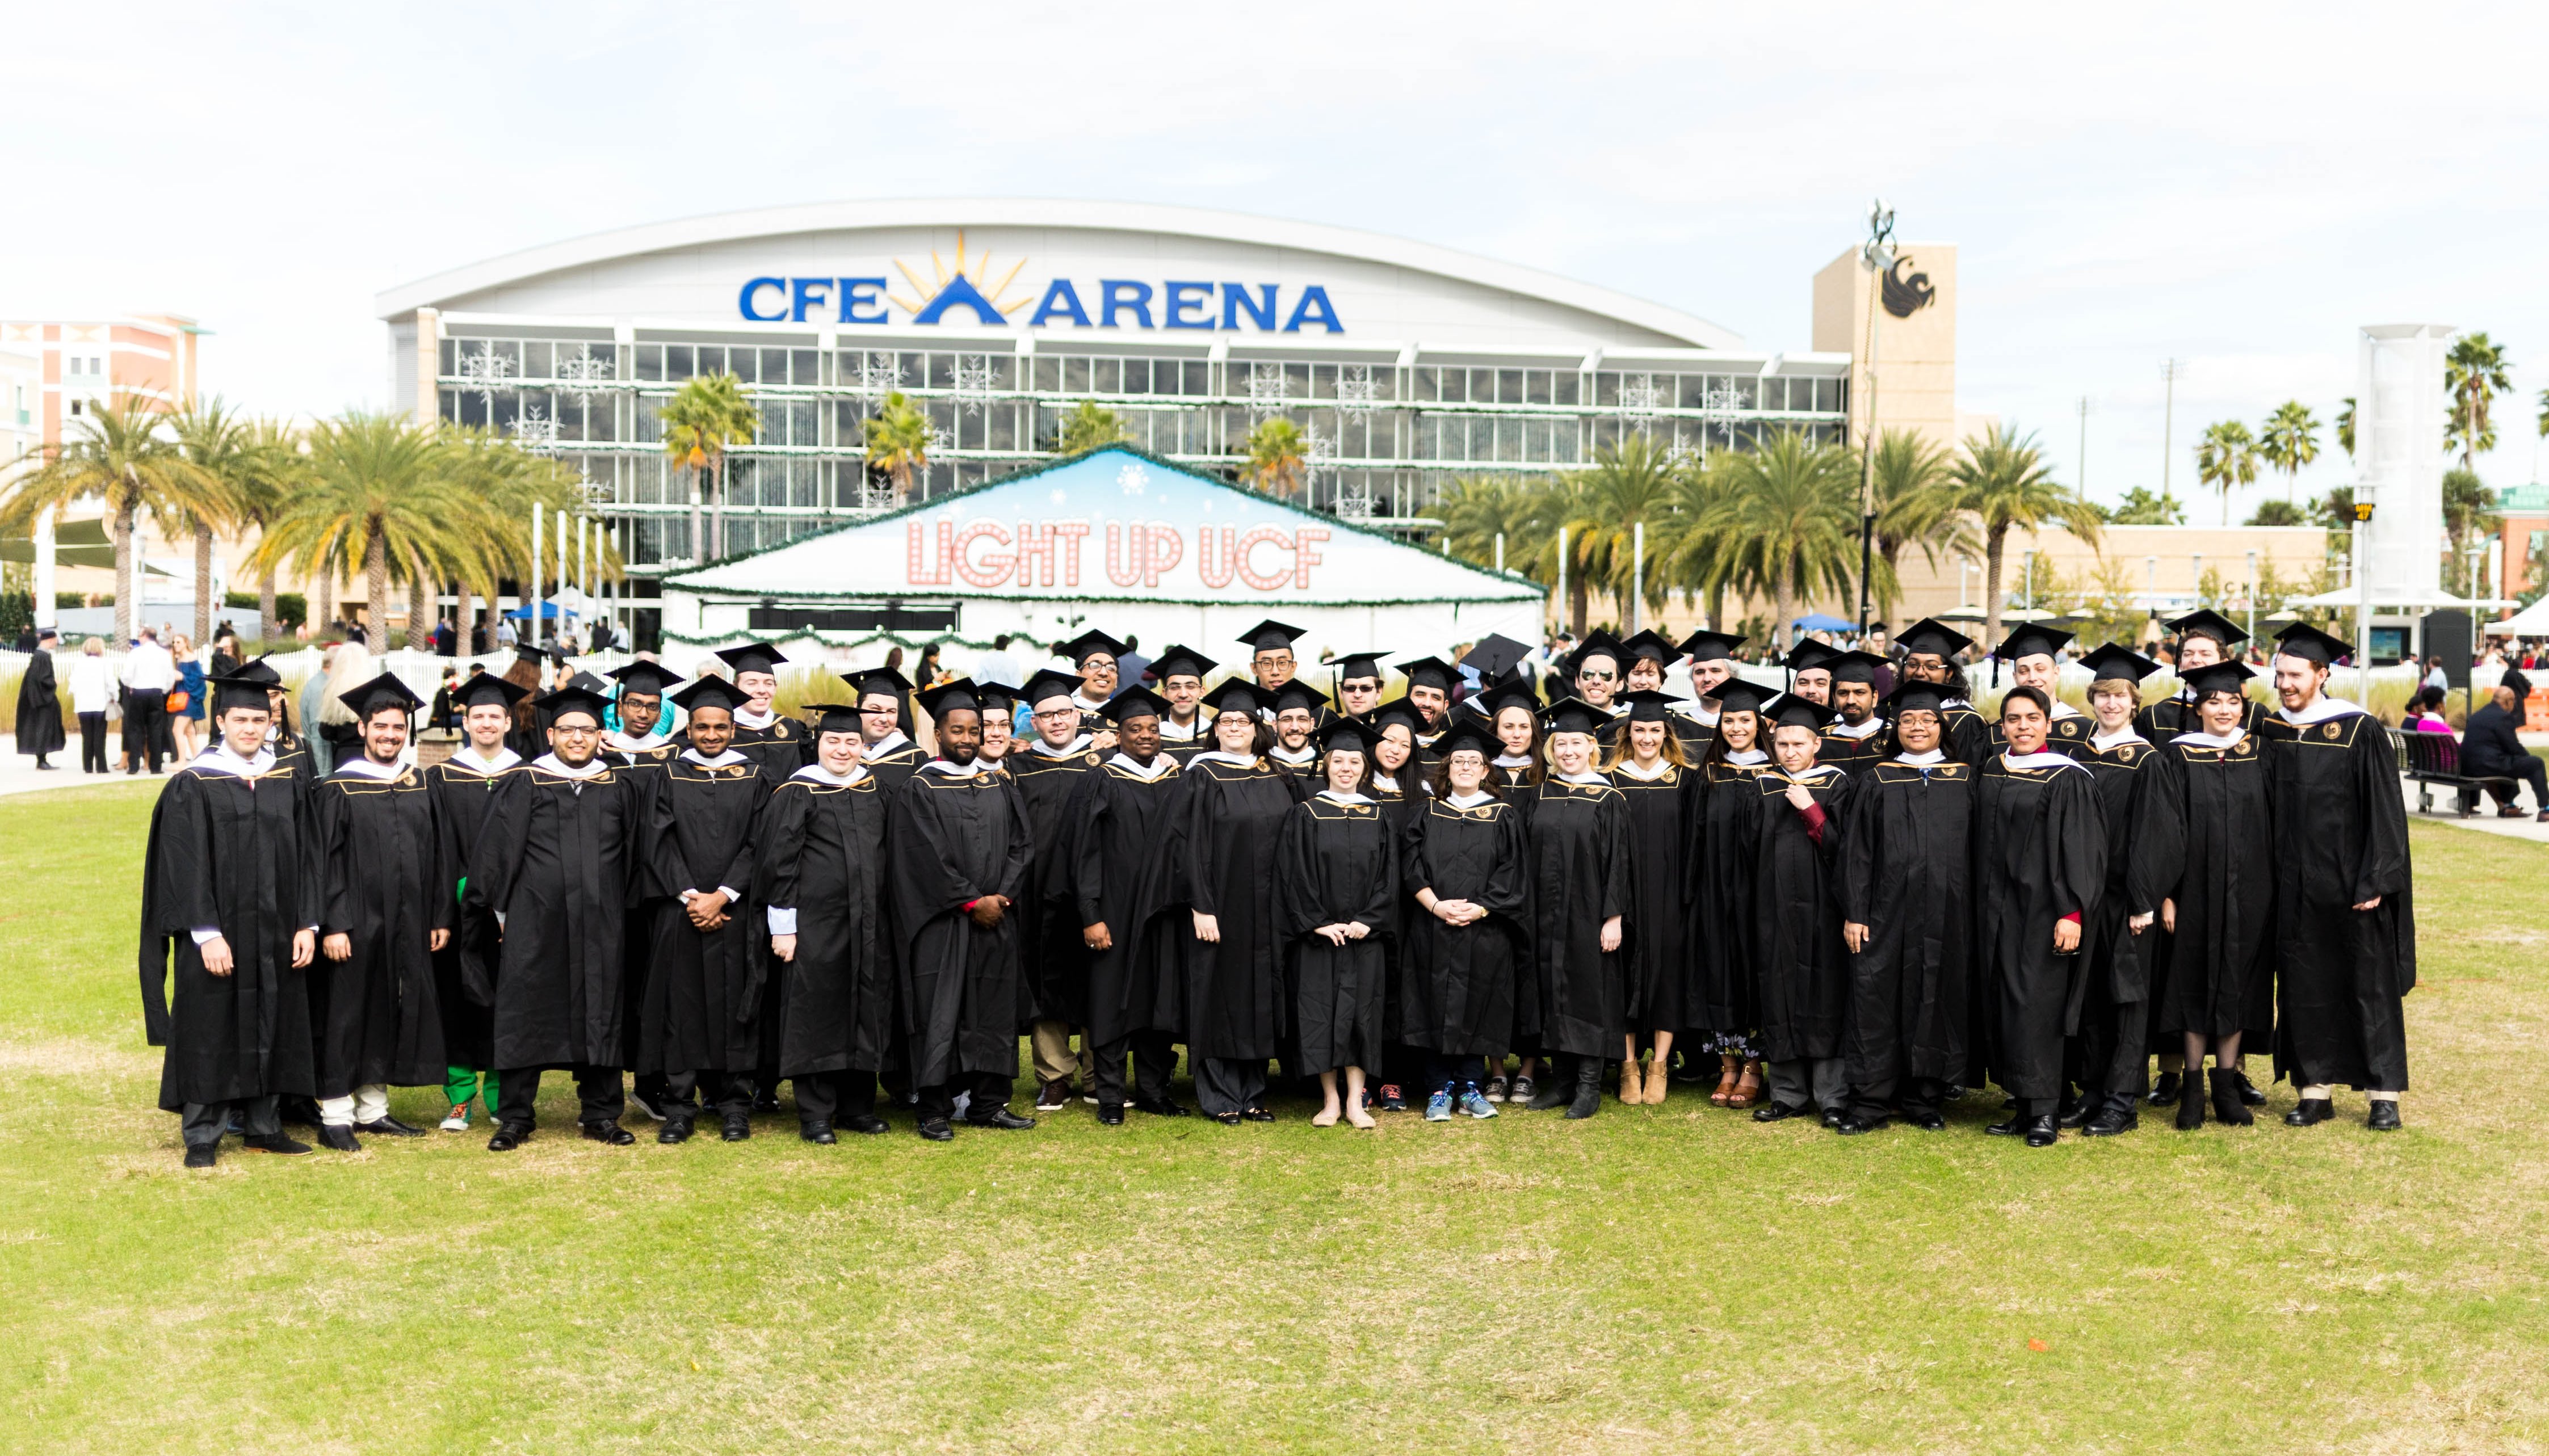 Read Fall 2017 FIEA Graduation by UCF's Florida Interactive Entertainment Academy